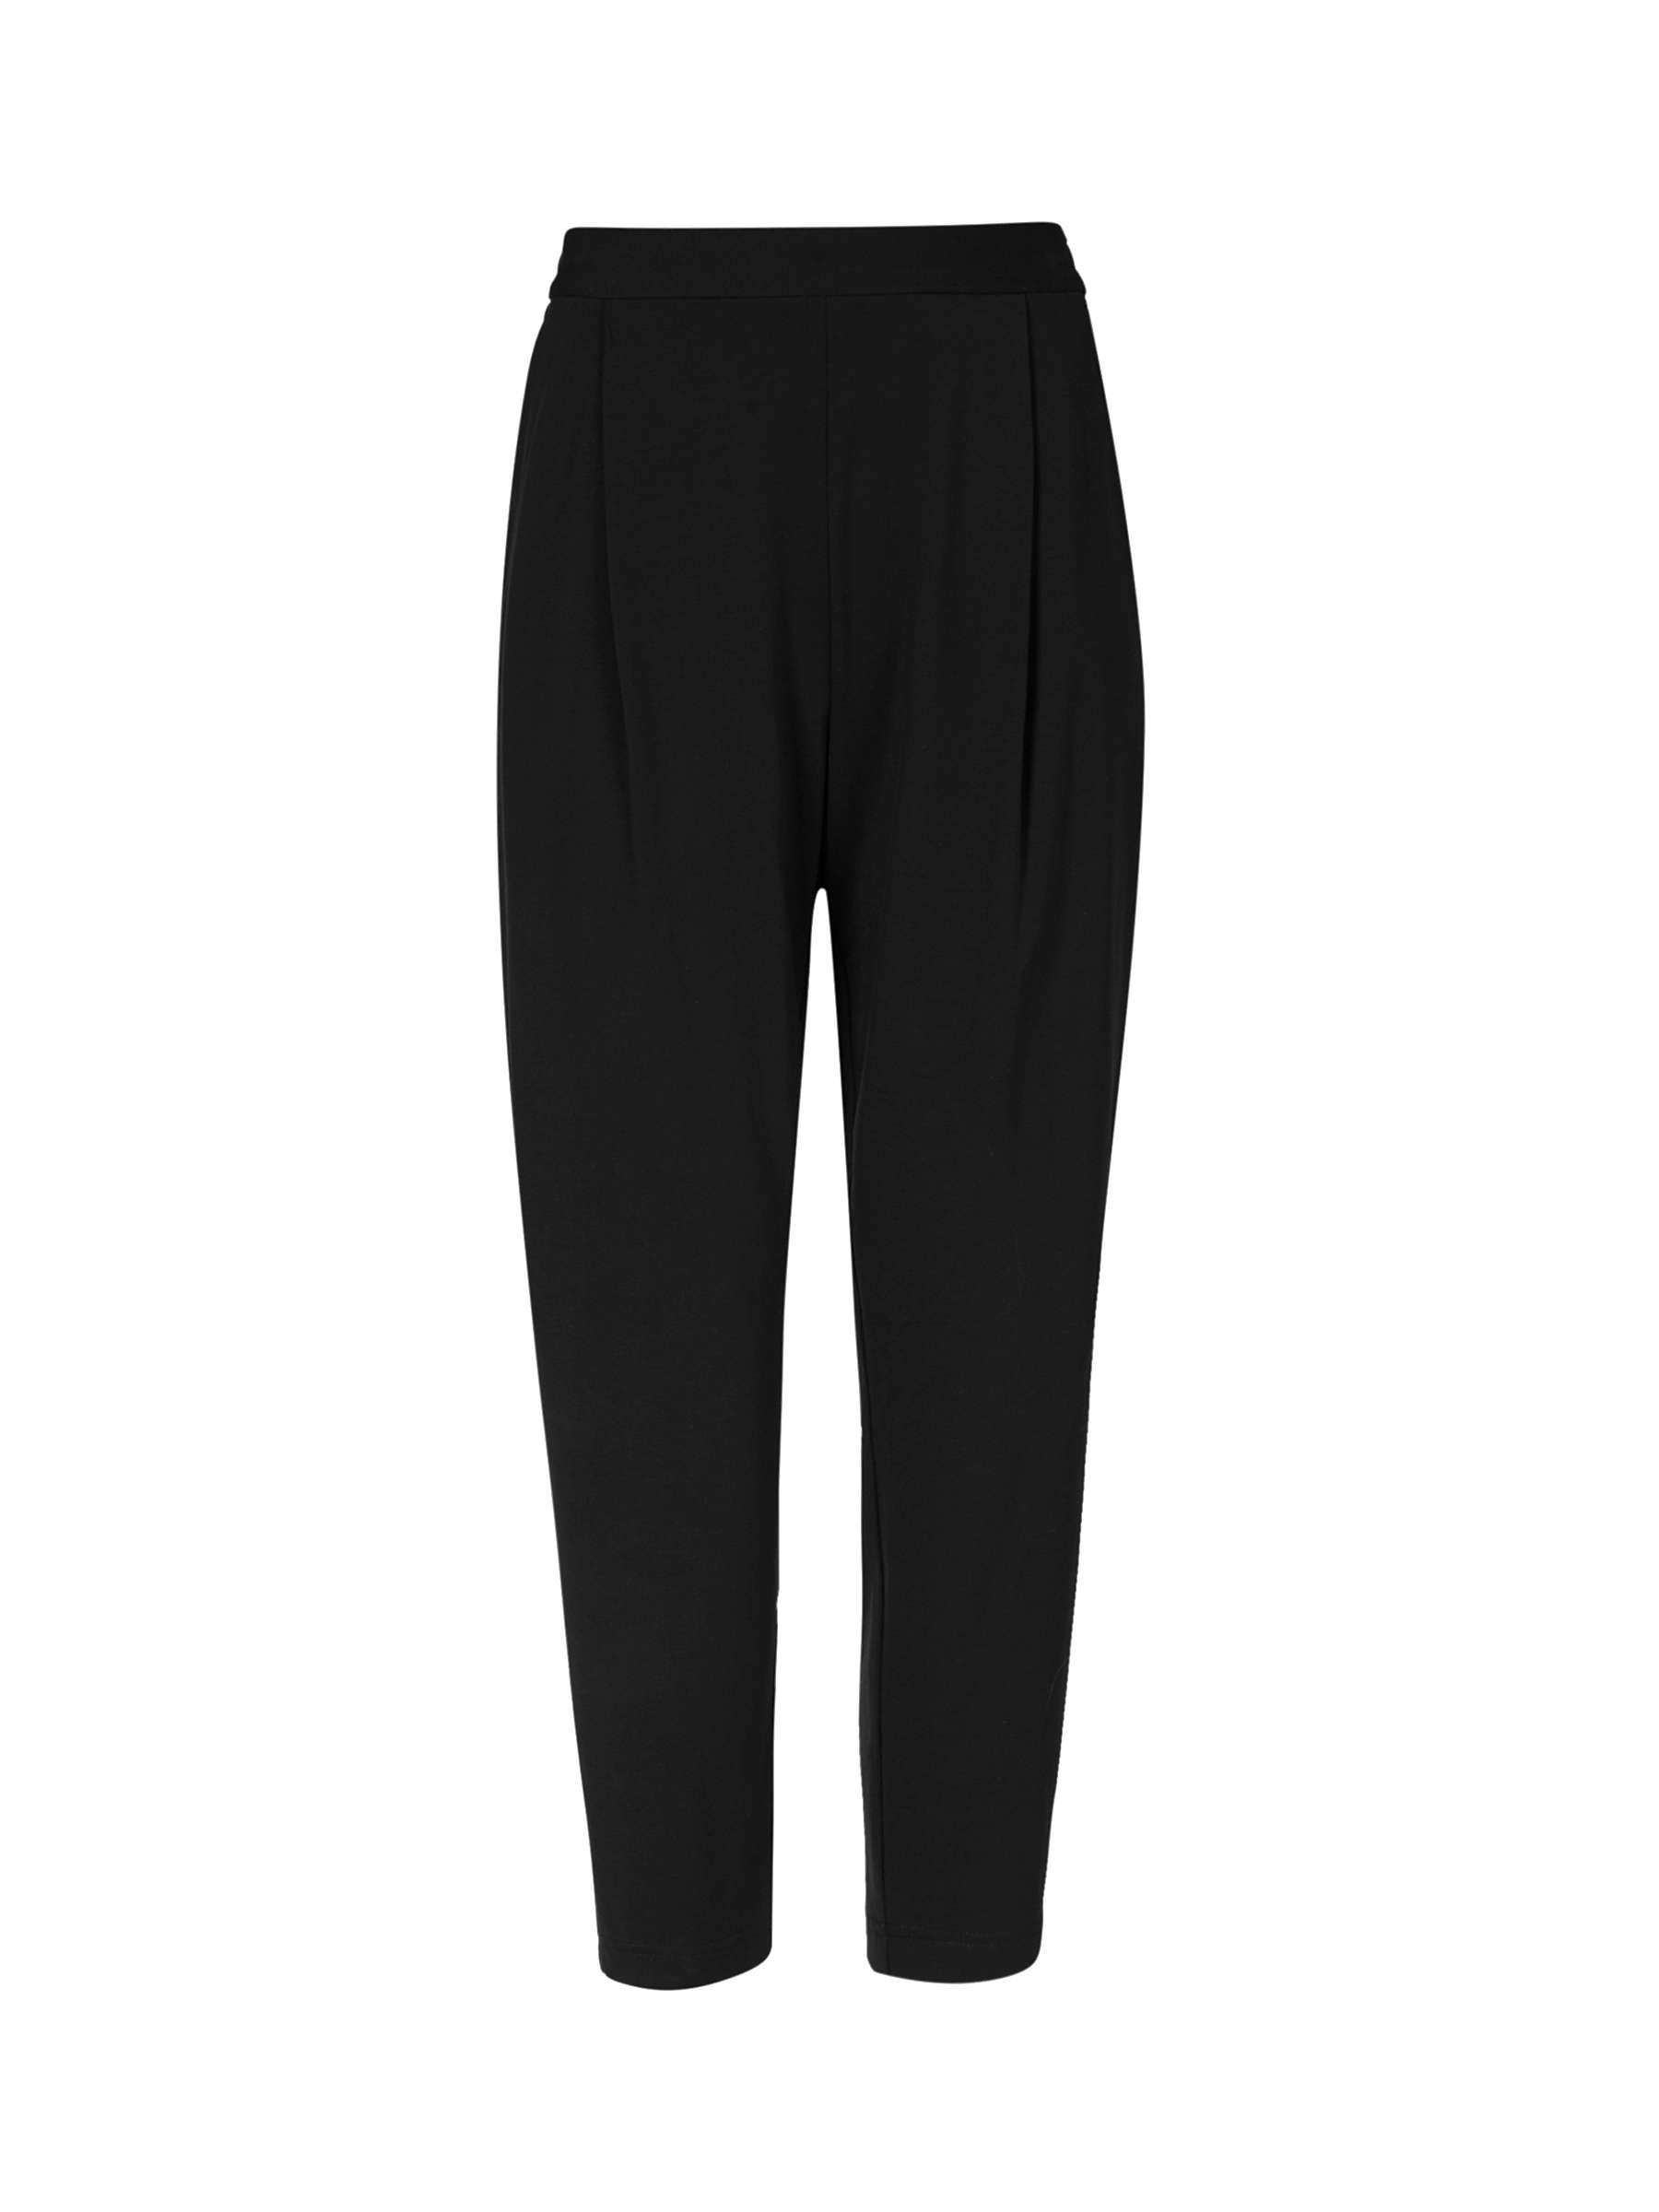 Buy AllSaints Aleida Ankle Grazer Jersey Trousers, Black Online at johnlewis.com